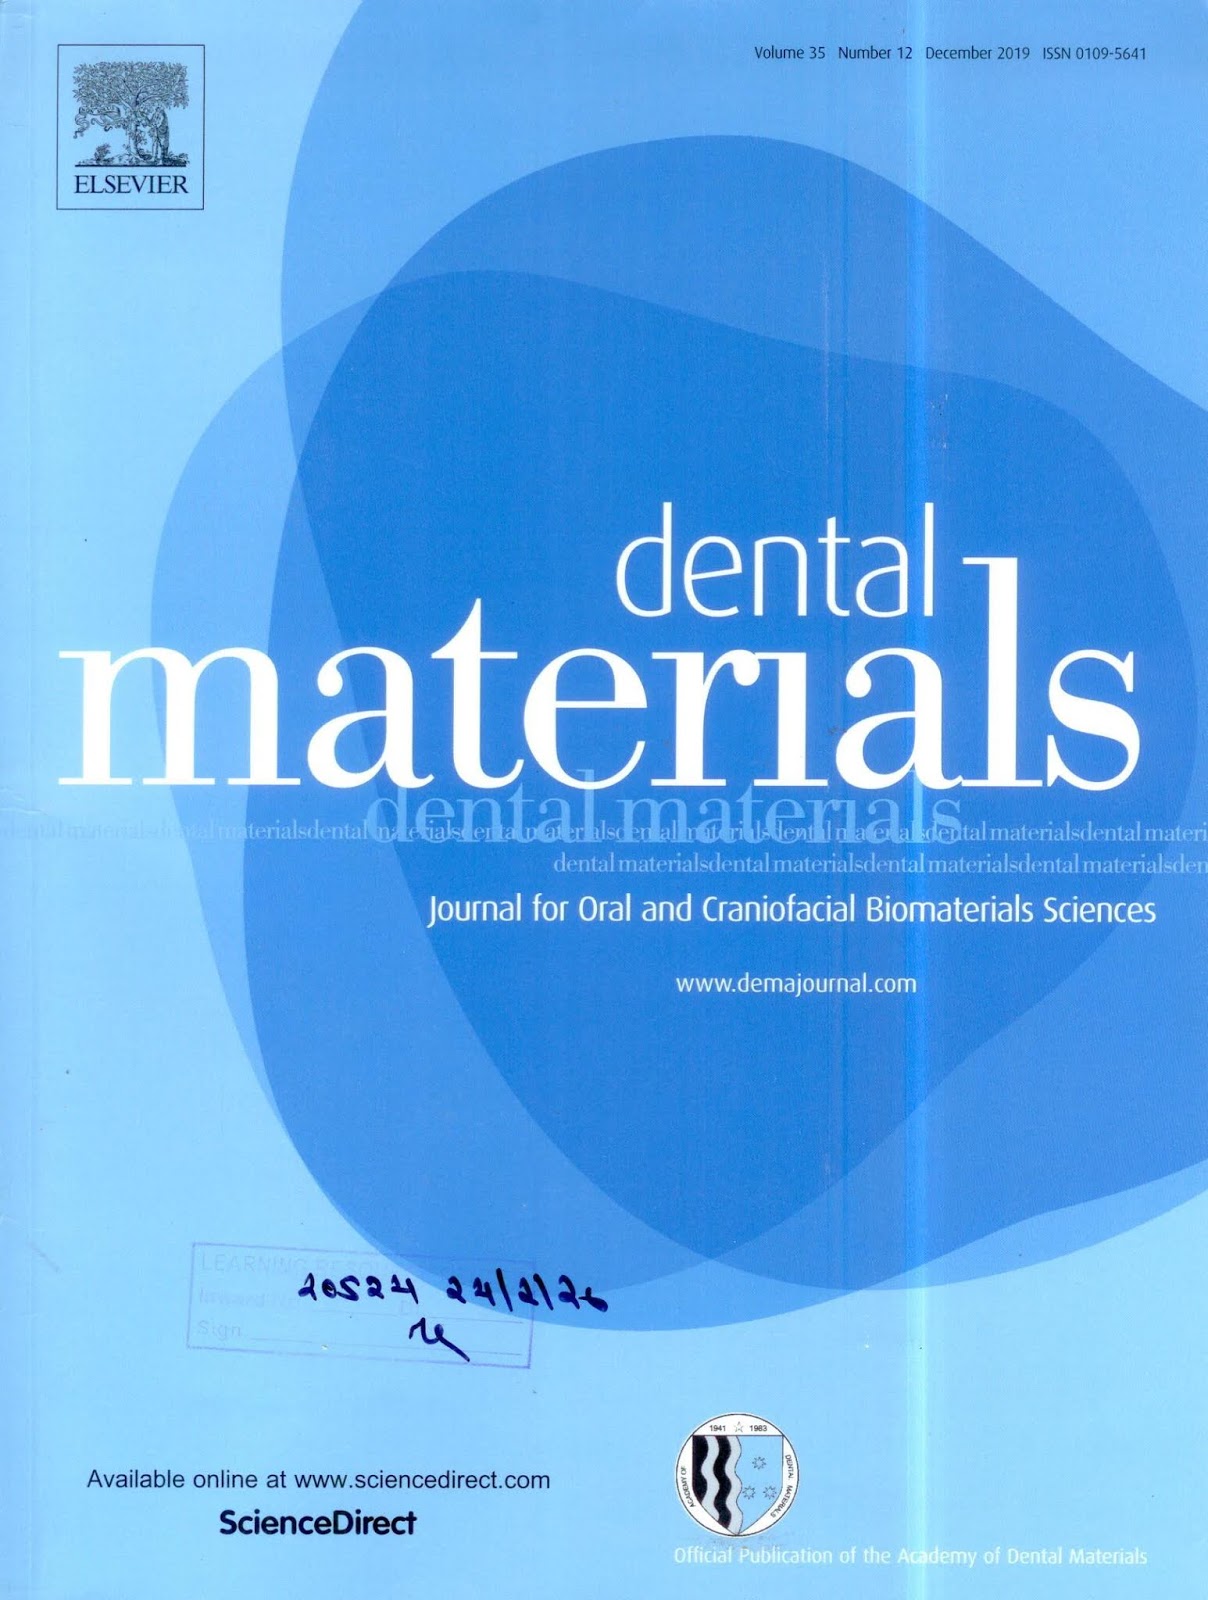 https://www.sciencedirect.com/journal/dental-materials/vol/35/issue/12